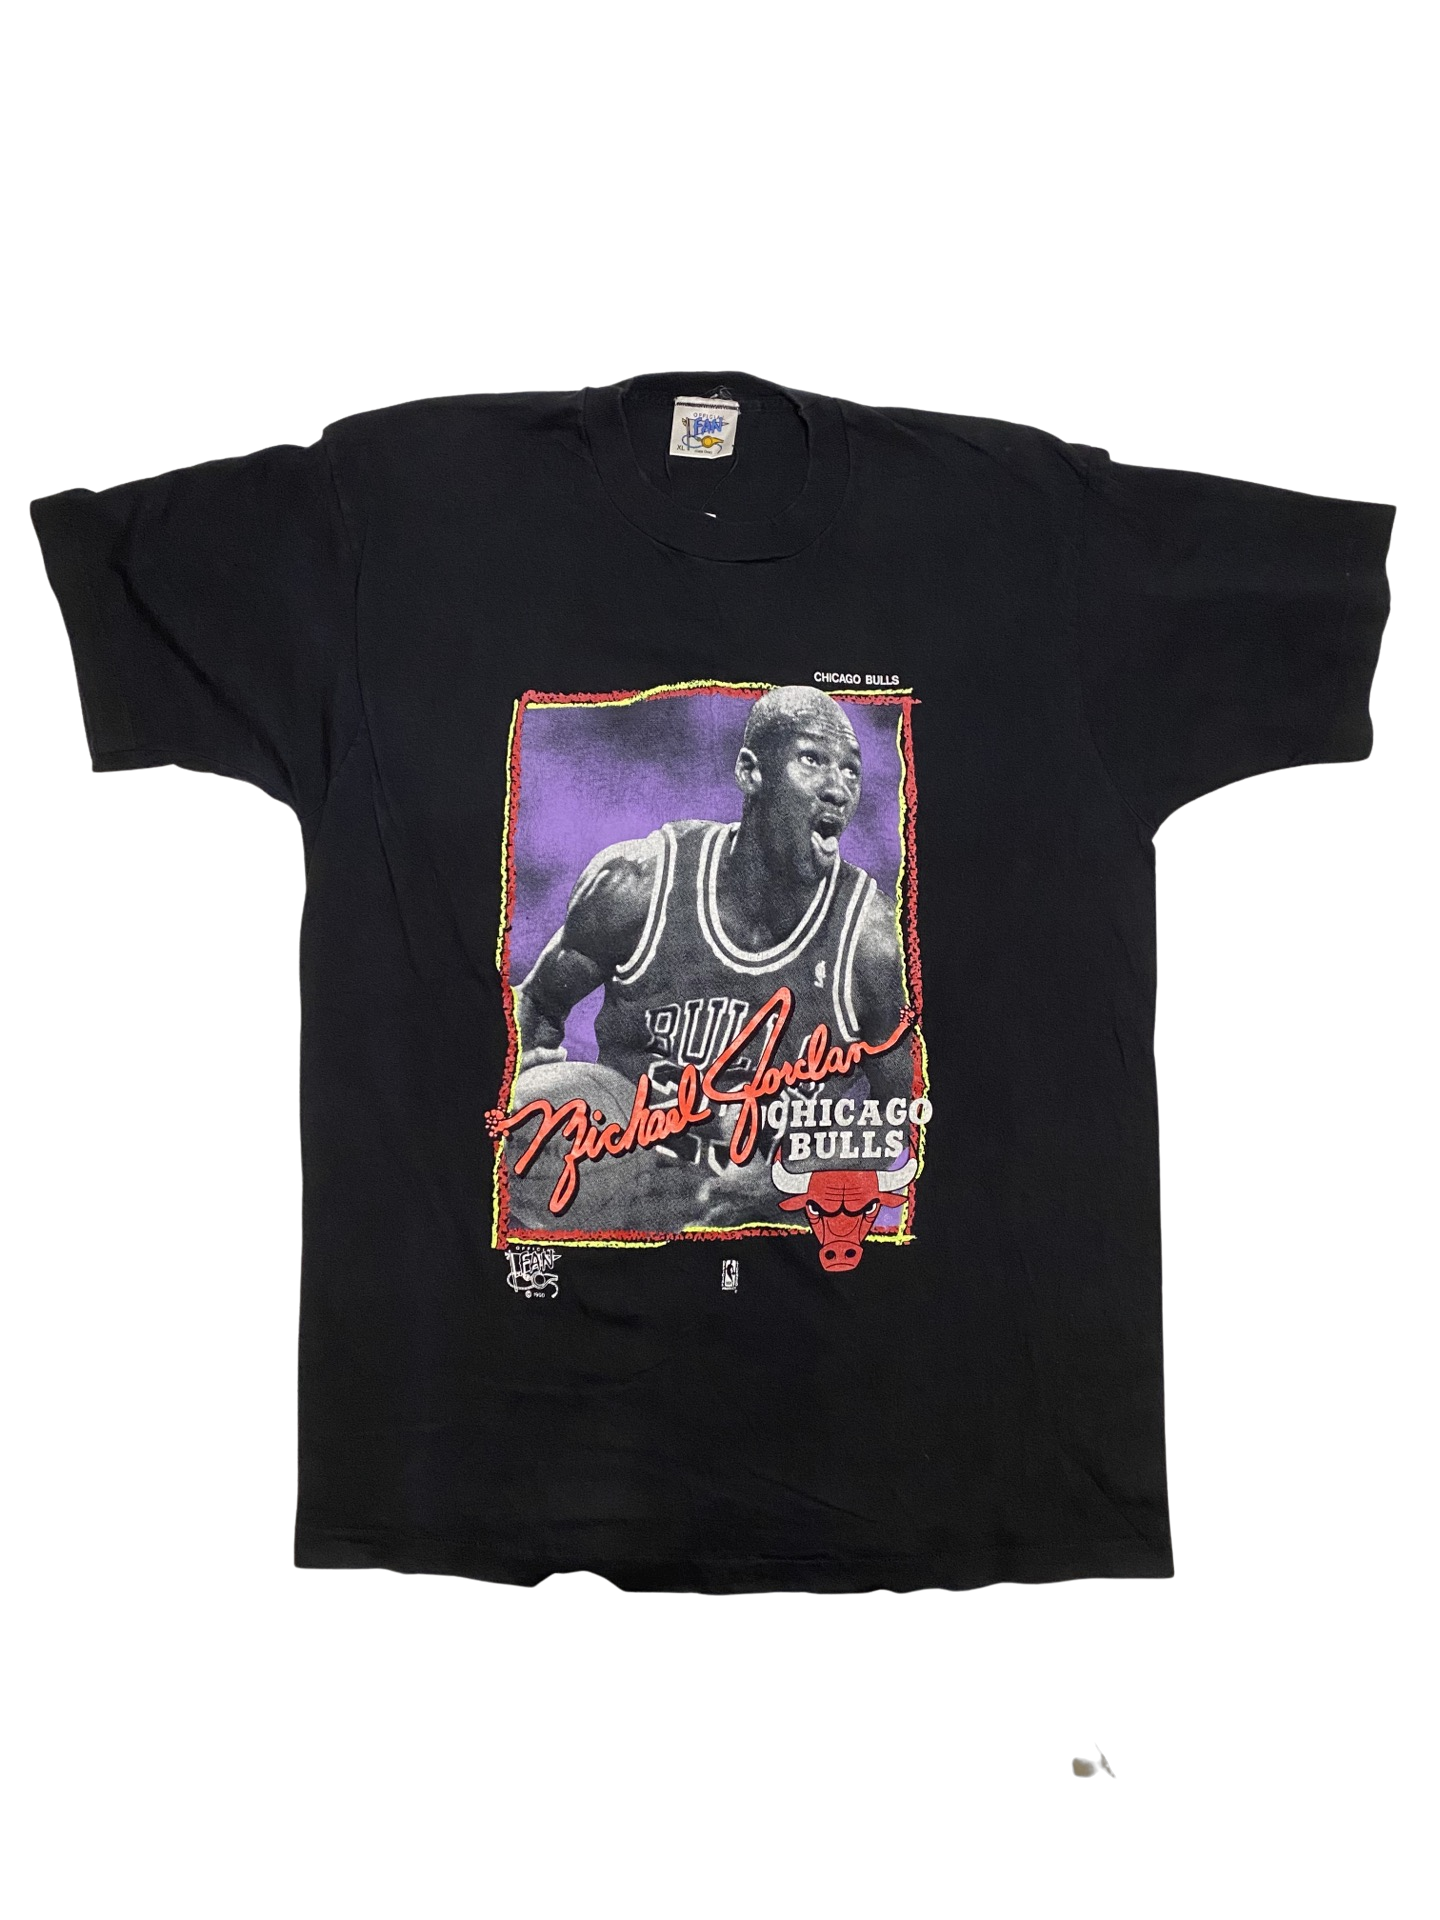 Vintage 1990 Michael Jordan shirt